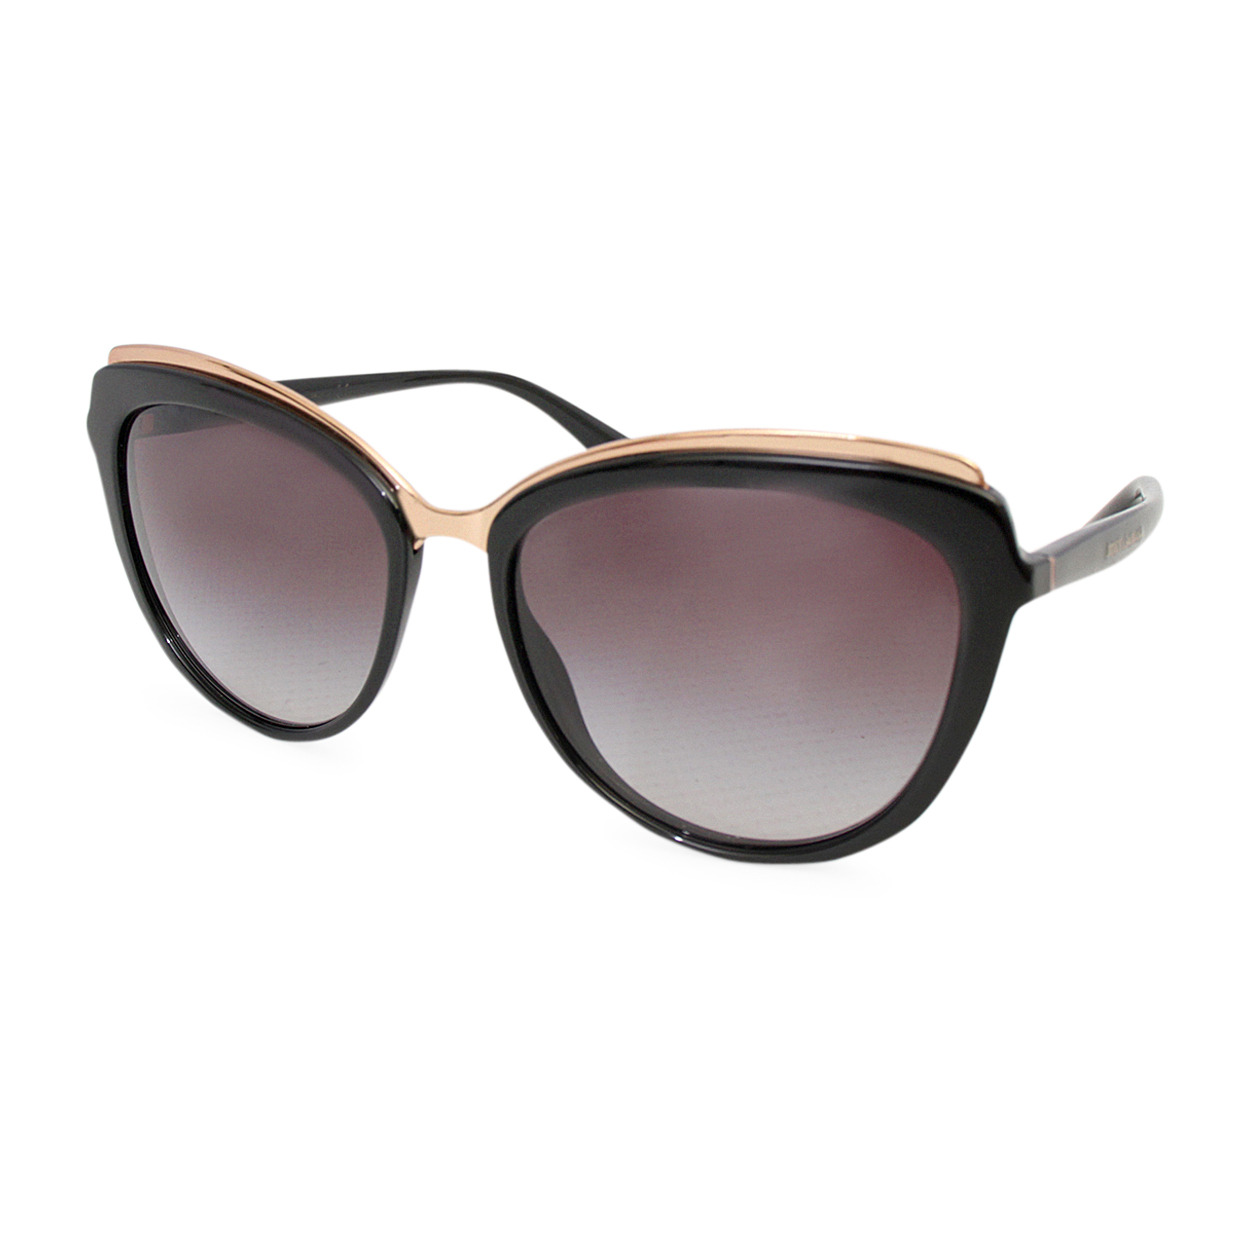 DOLCE & GABANNA Sunglasses DG 4304 Black | Luxity